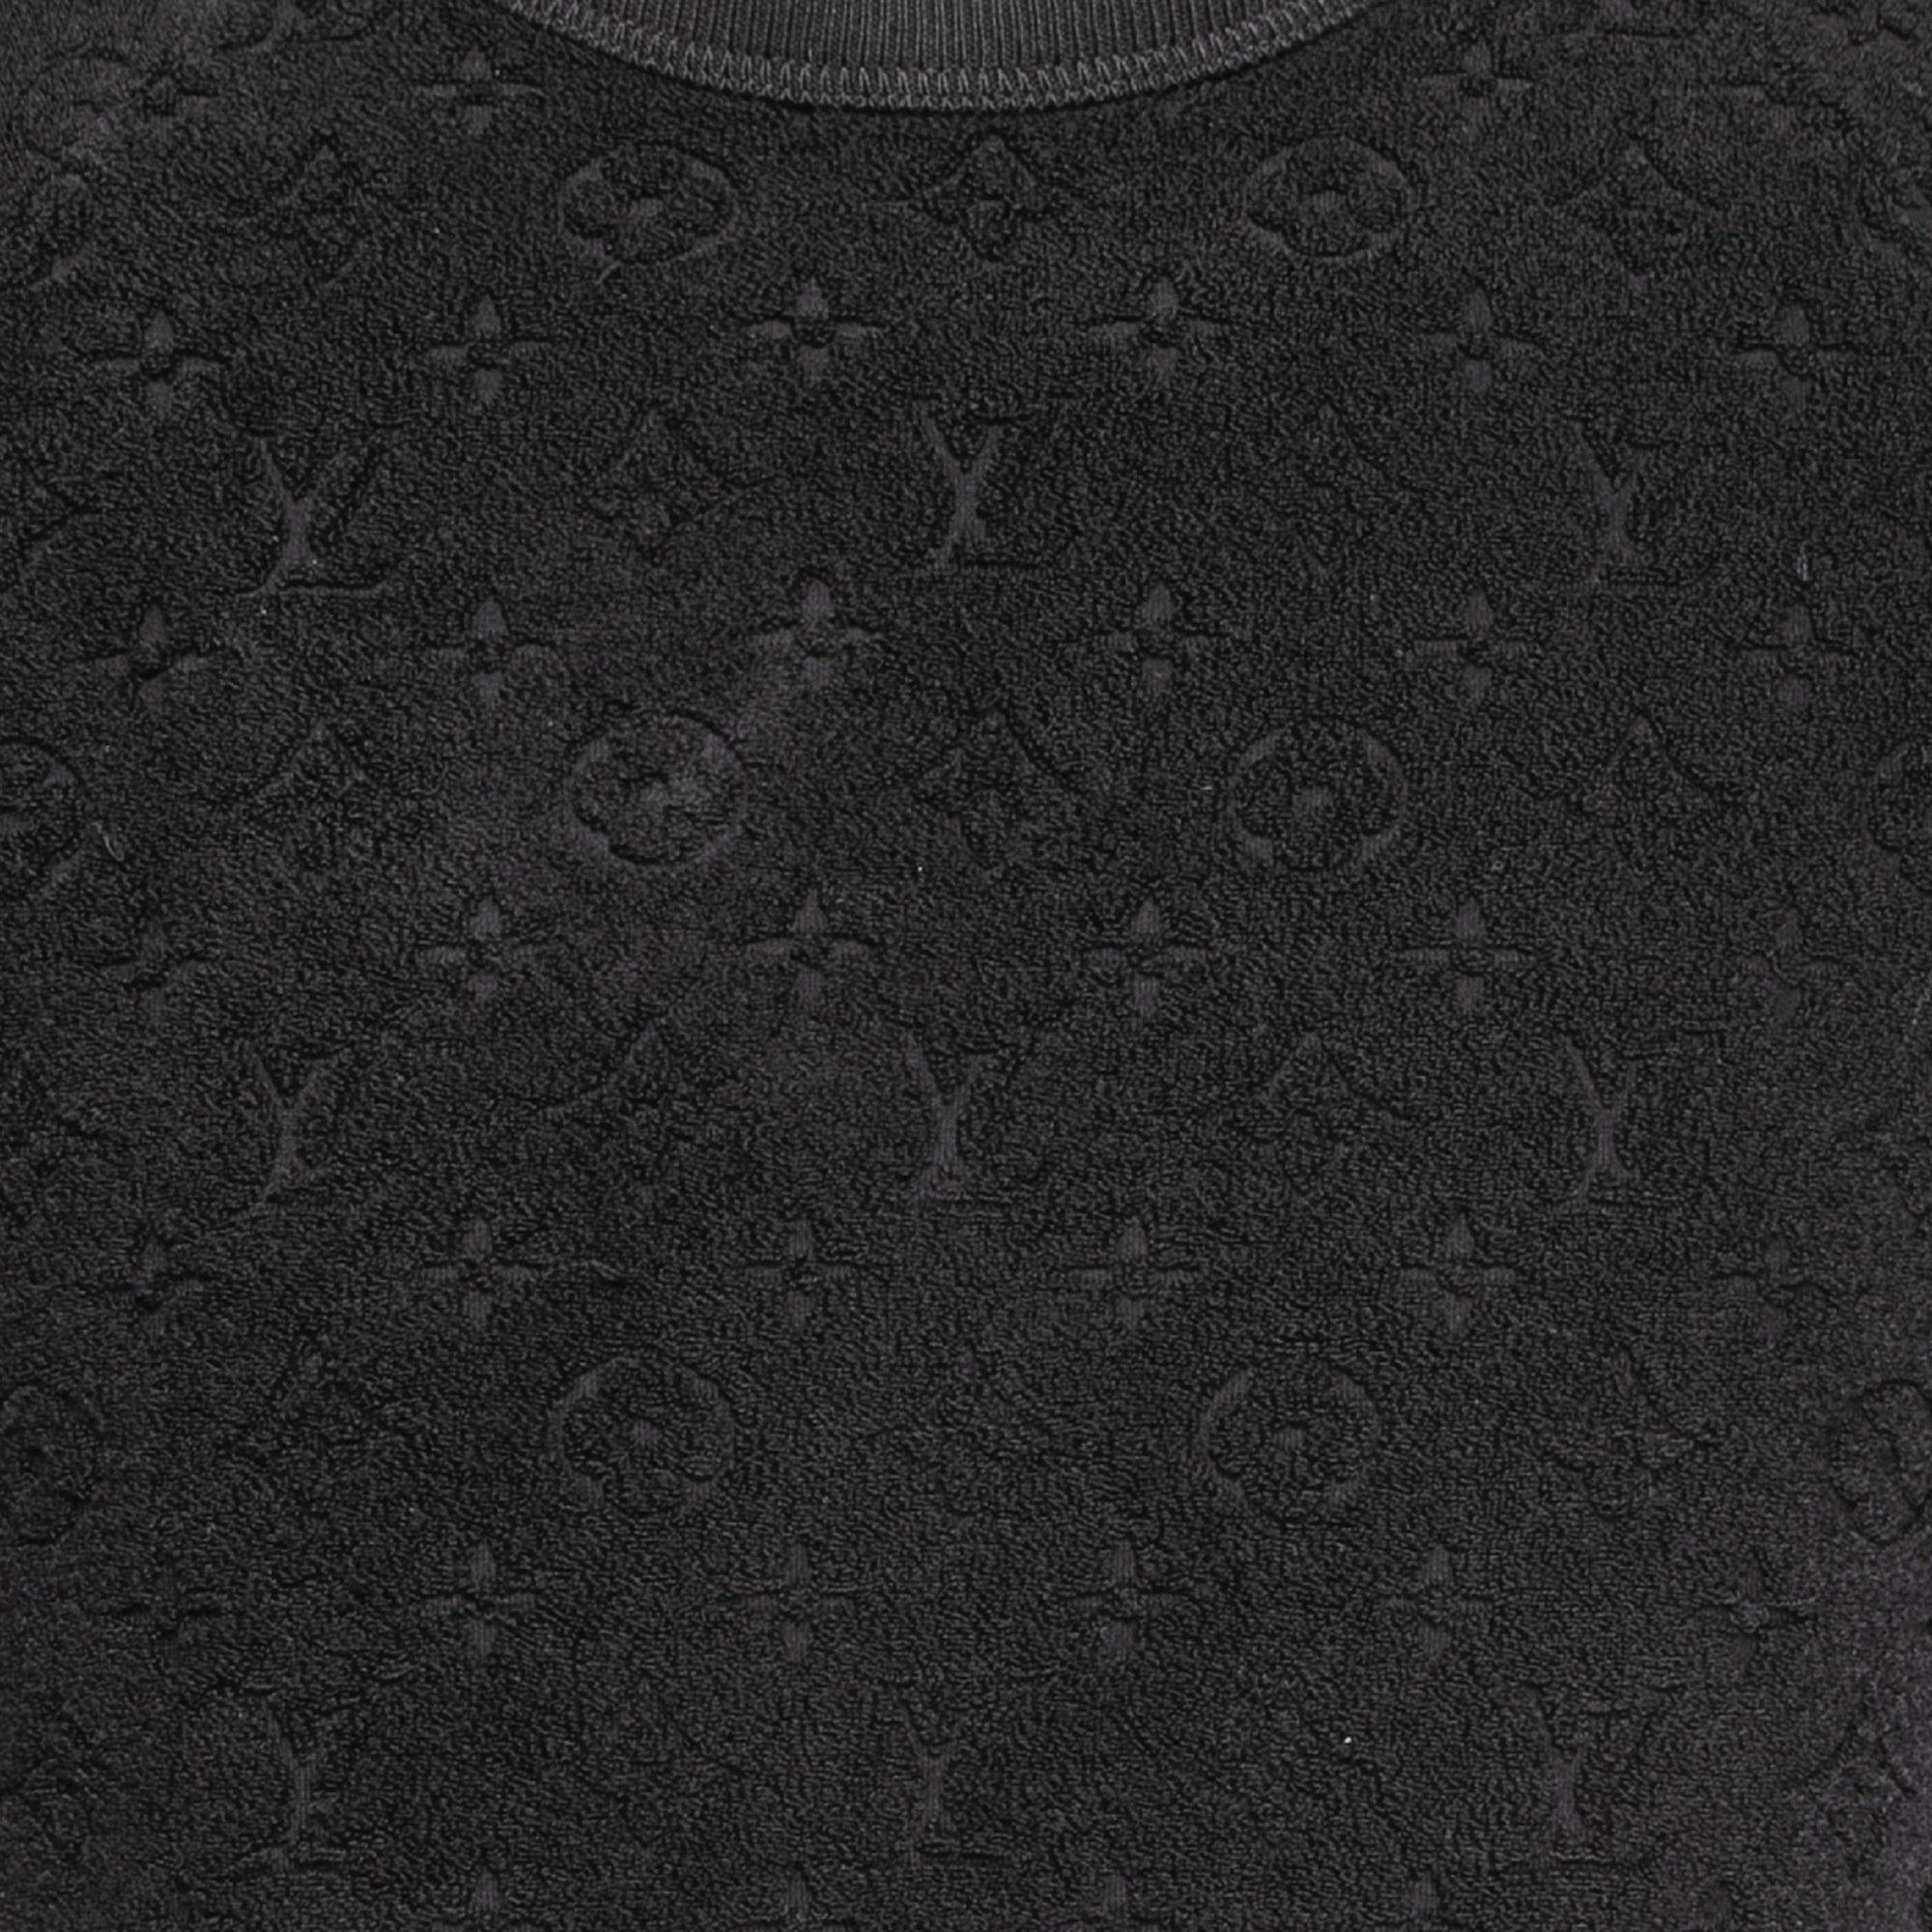 Louis Vuitton Monogram Terry Cotton & Silk Short Sleeve T-Shirt S